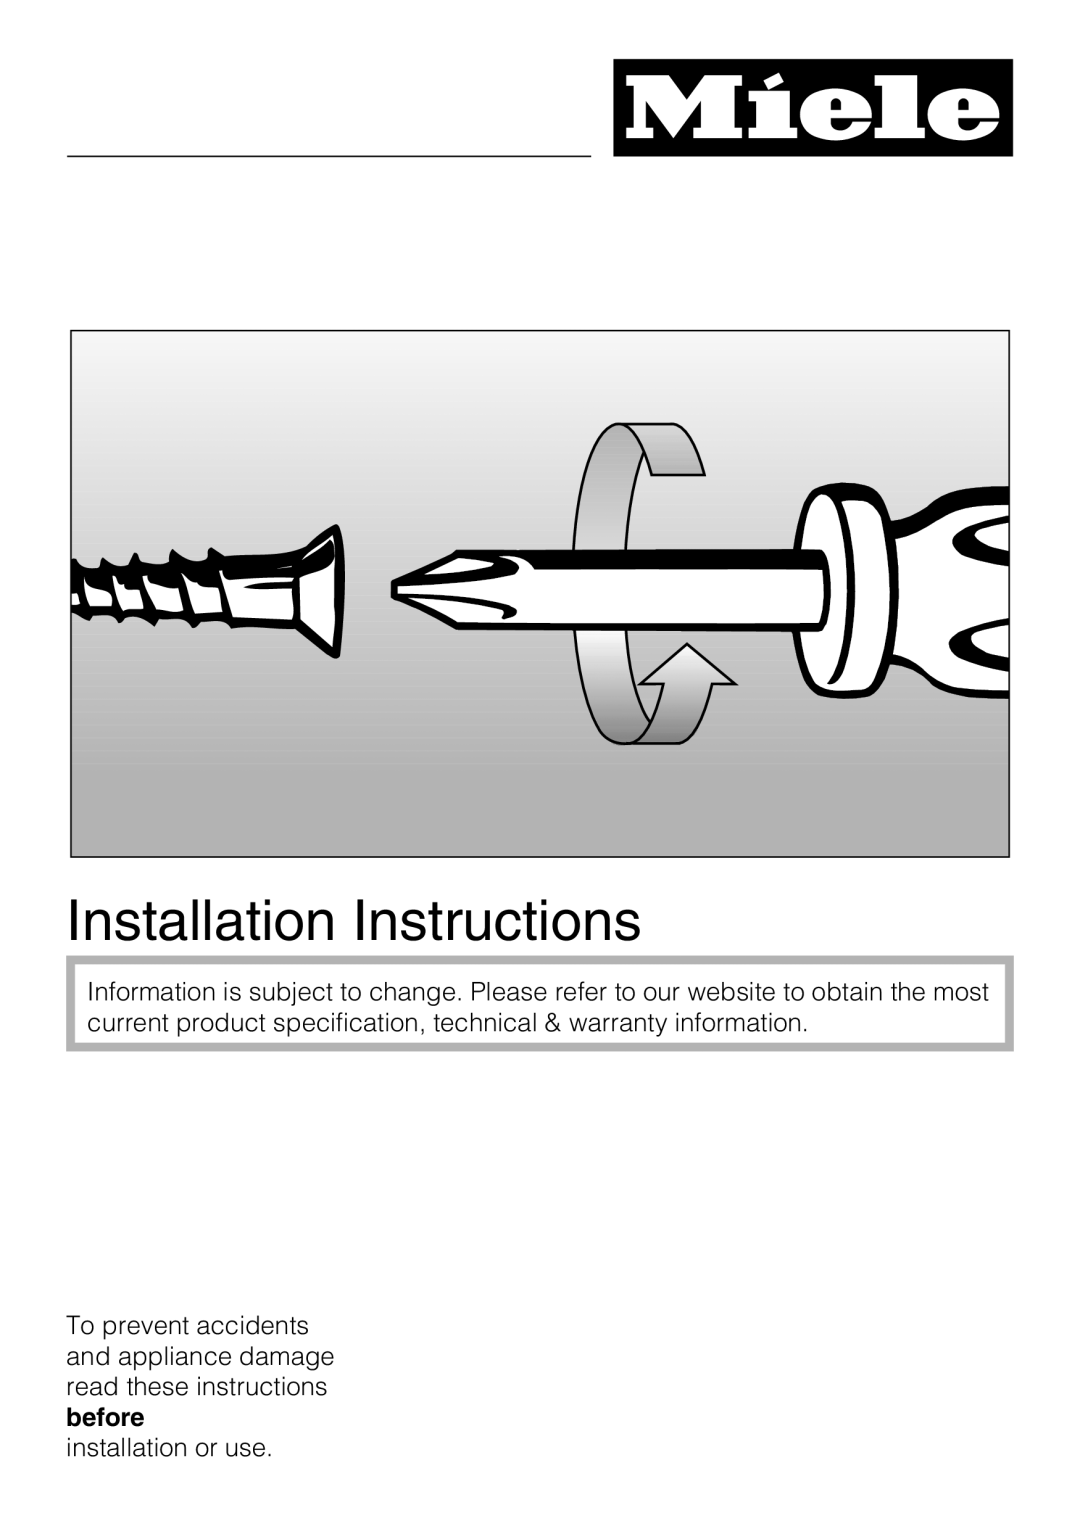 Miele 09 800 830 installation instructions Installation Instructions 